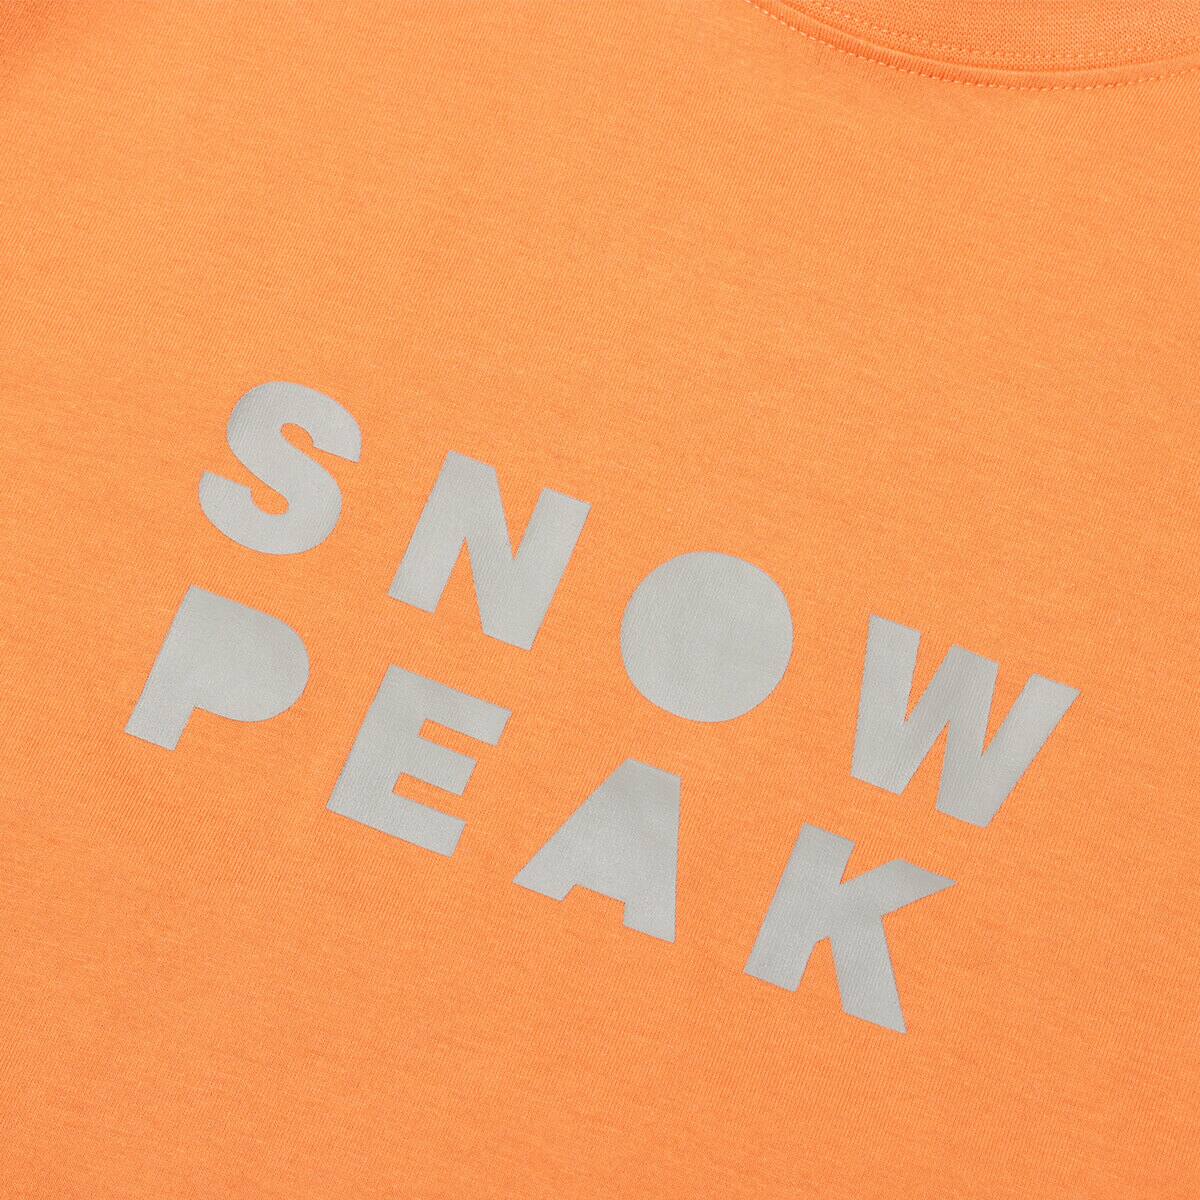 snow peak SNOWPEAKER T-Shirt CAMPER Orange